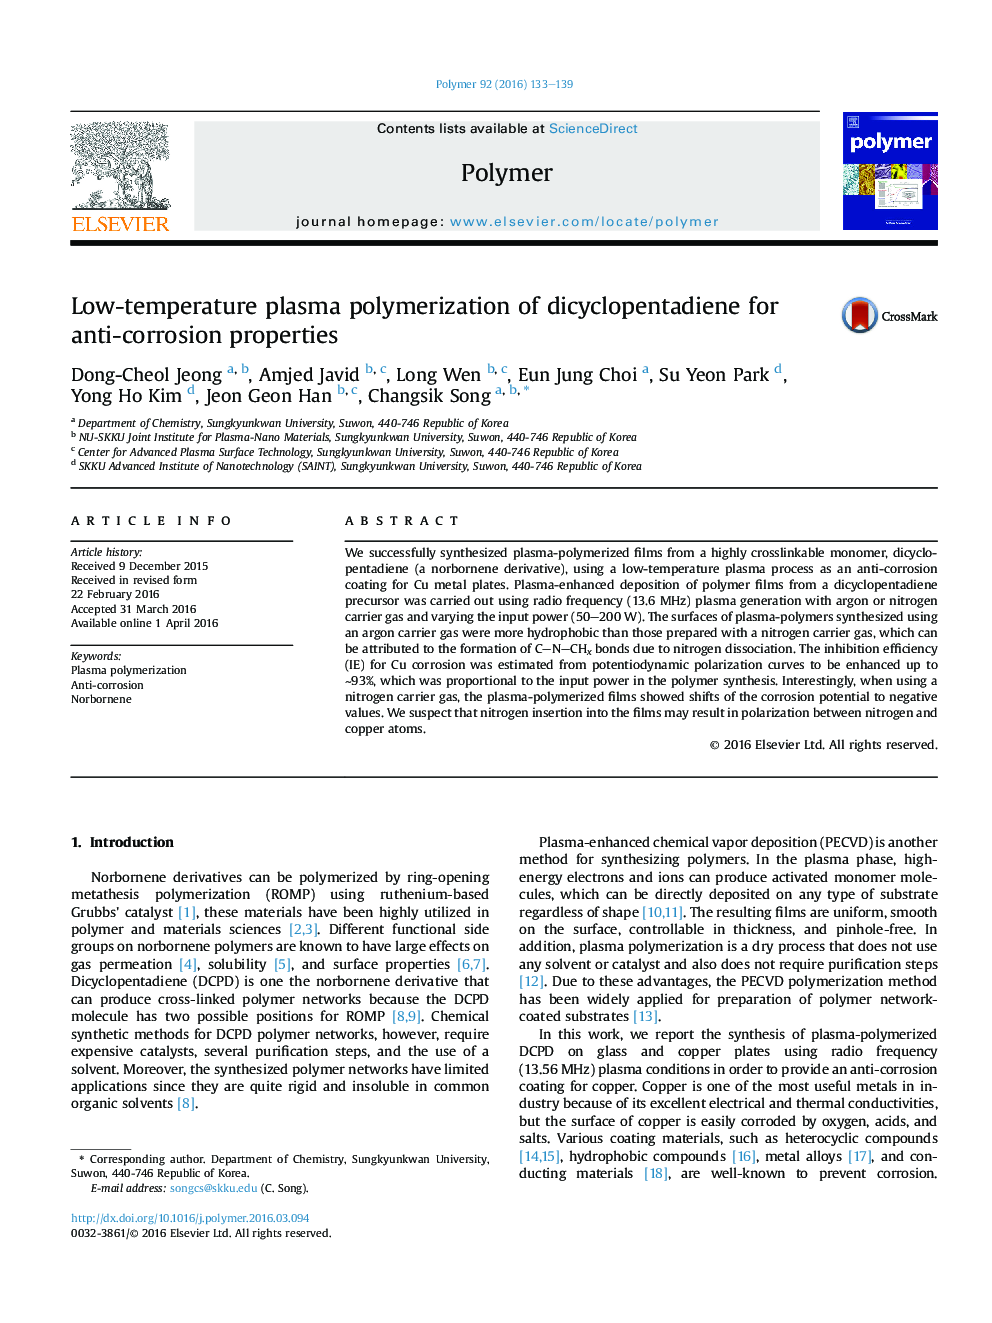 Low-temperature plasma polymerization of dicyclopentadiene for anti-corrosion properties